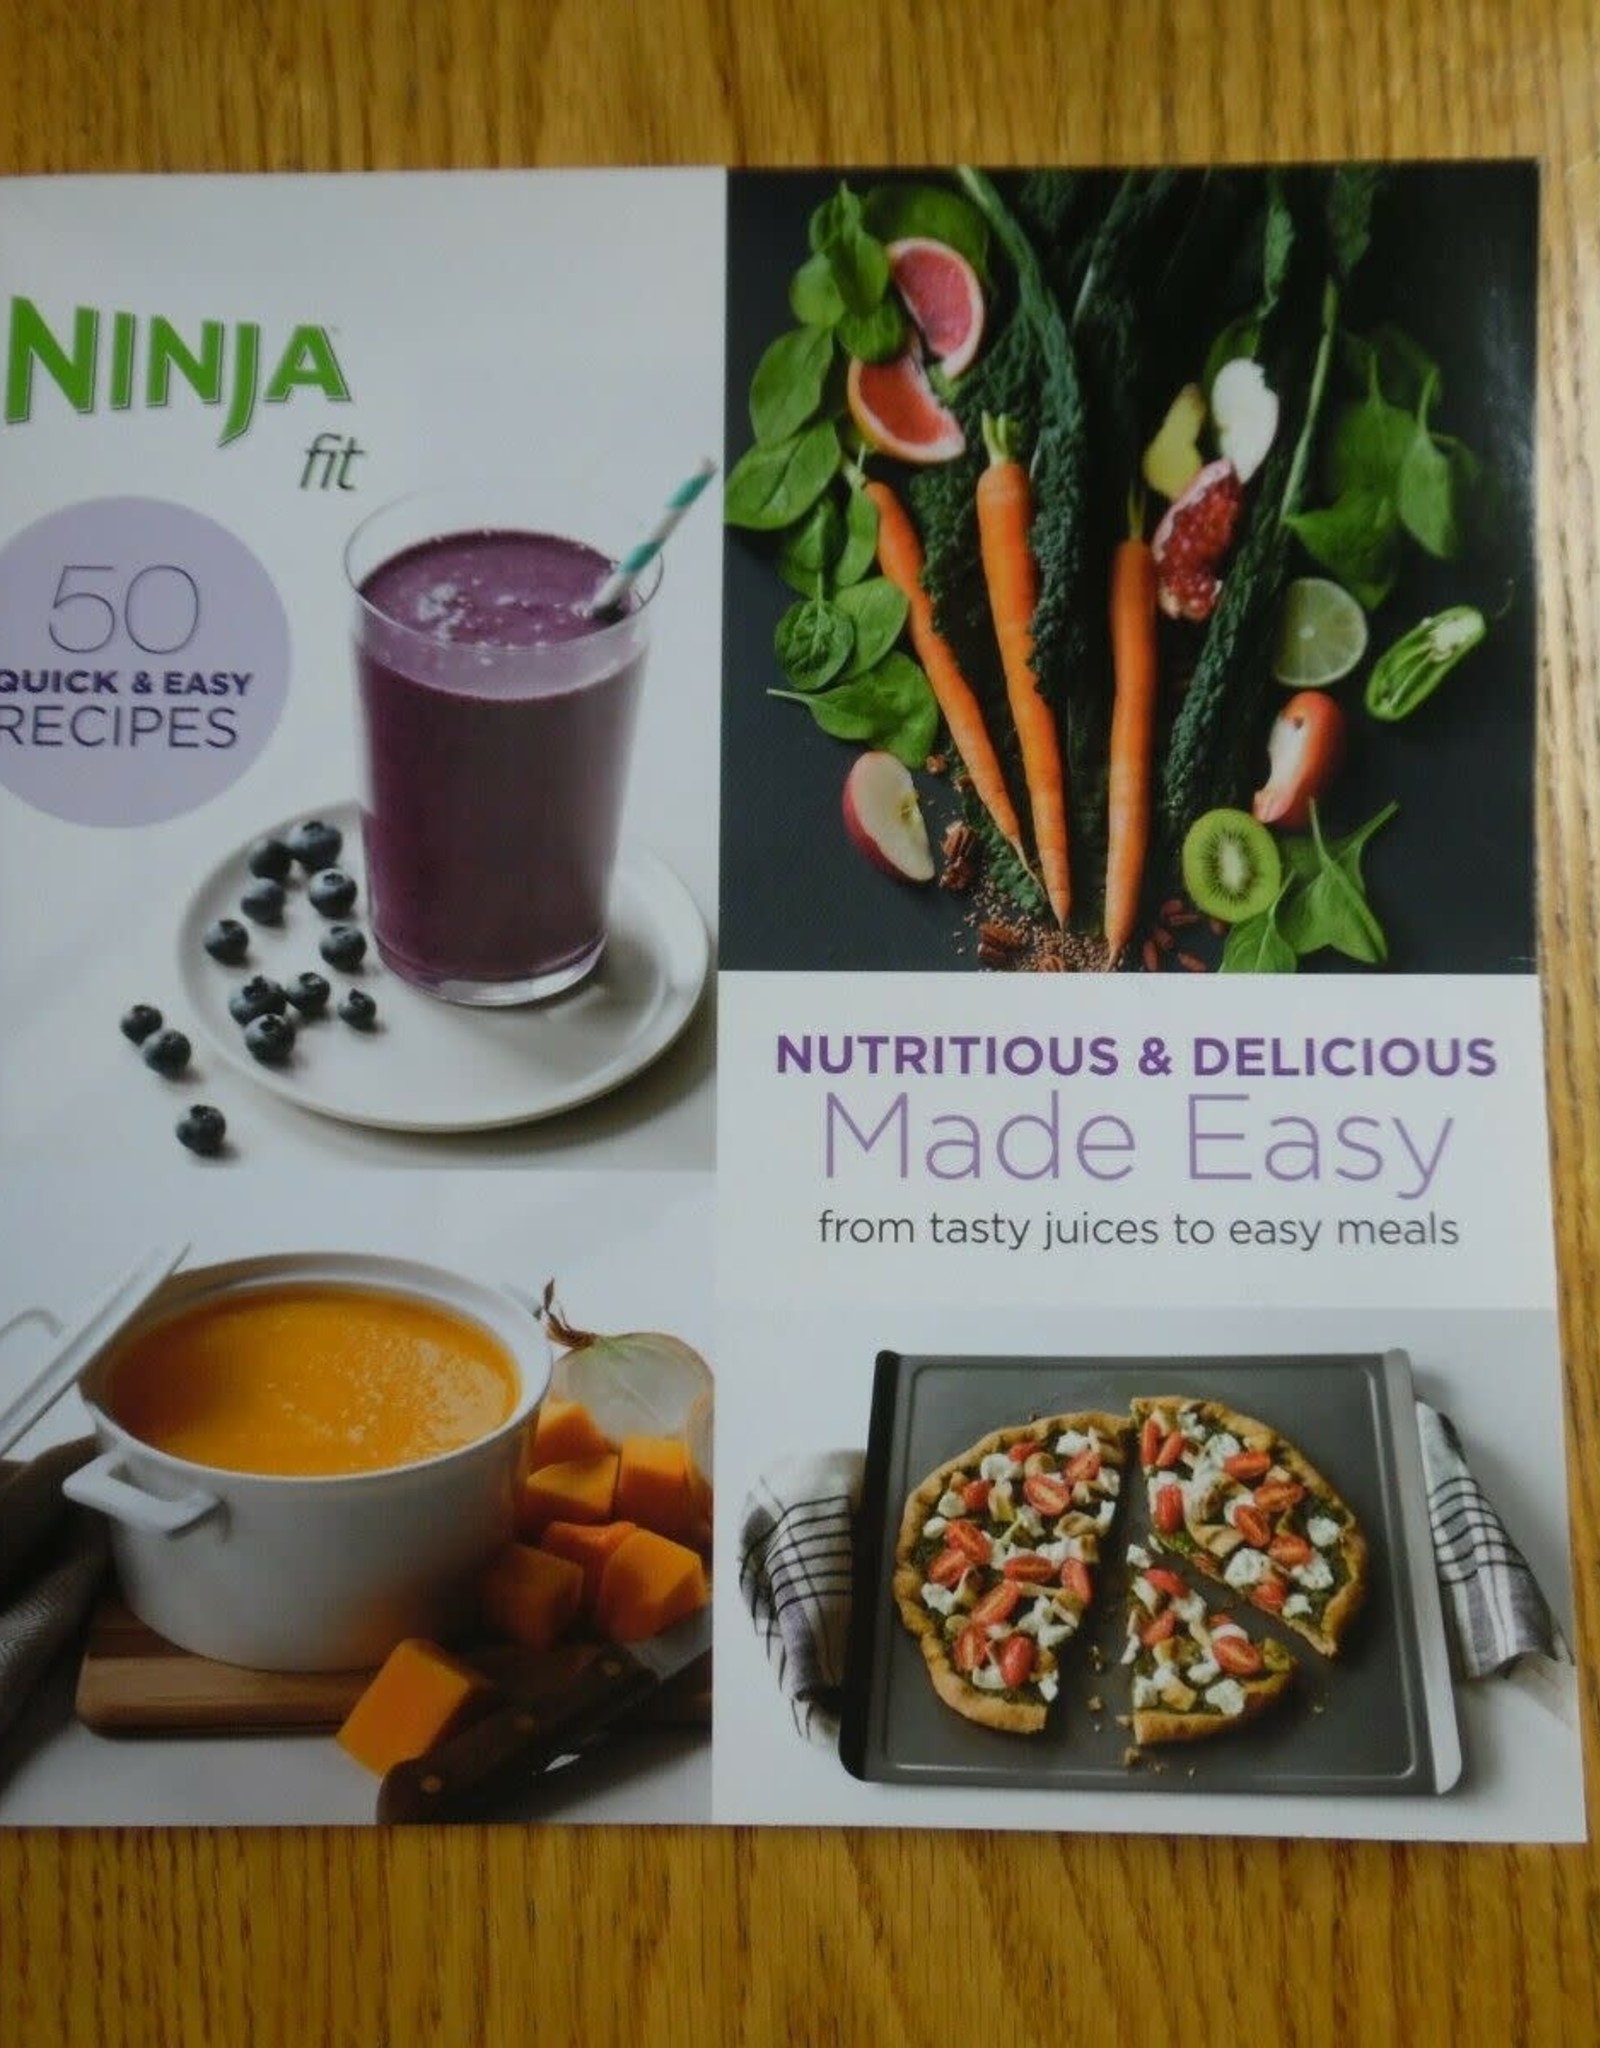 Ninja Ninja fit 50 Quick & Easy Recipes